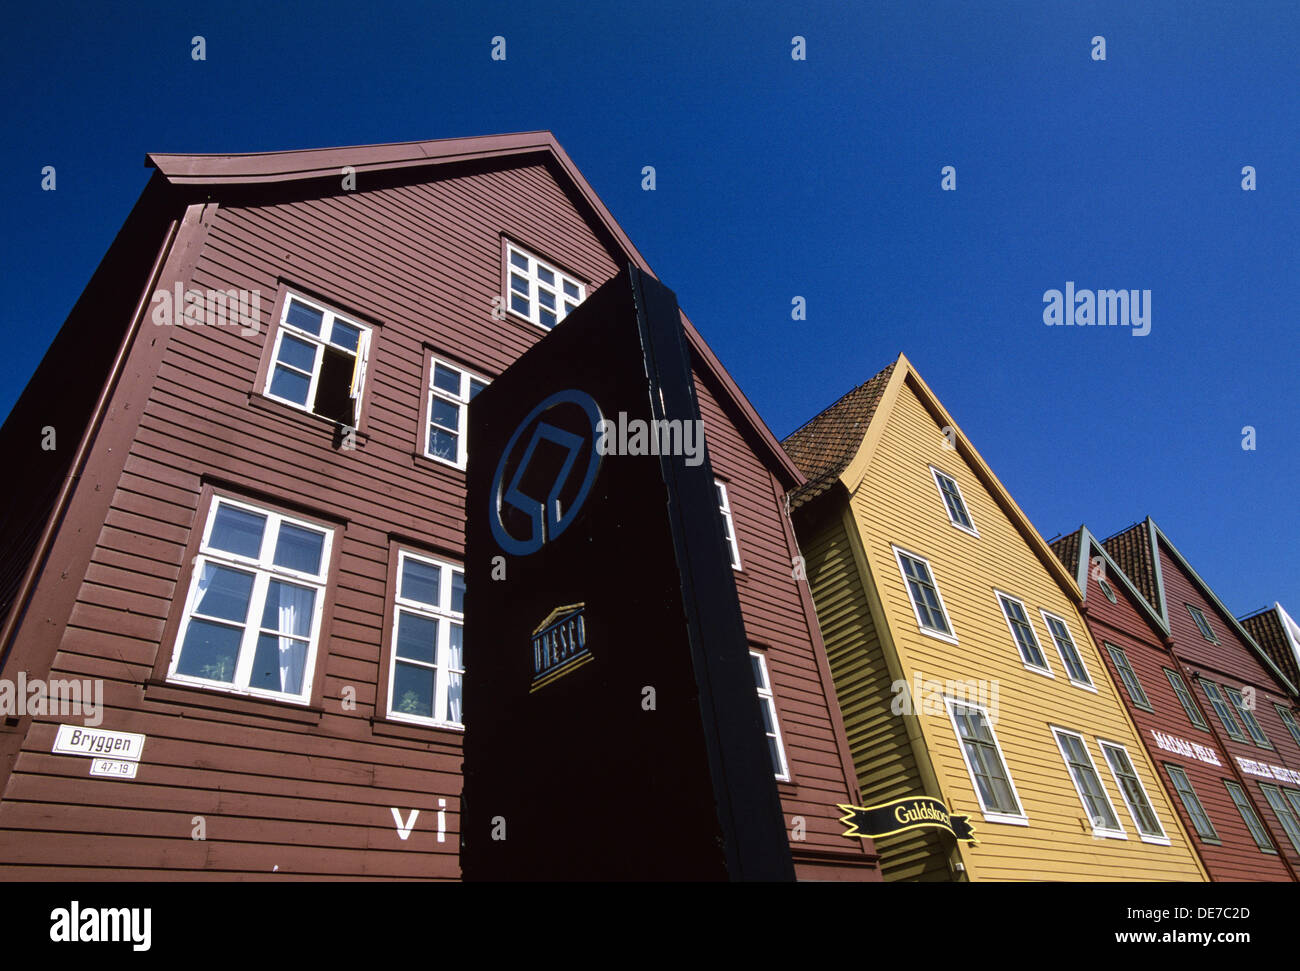 Storefronts in row houses, Bryggen quarter, Bergen. Norway Stock Photo